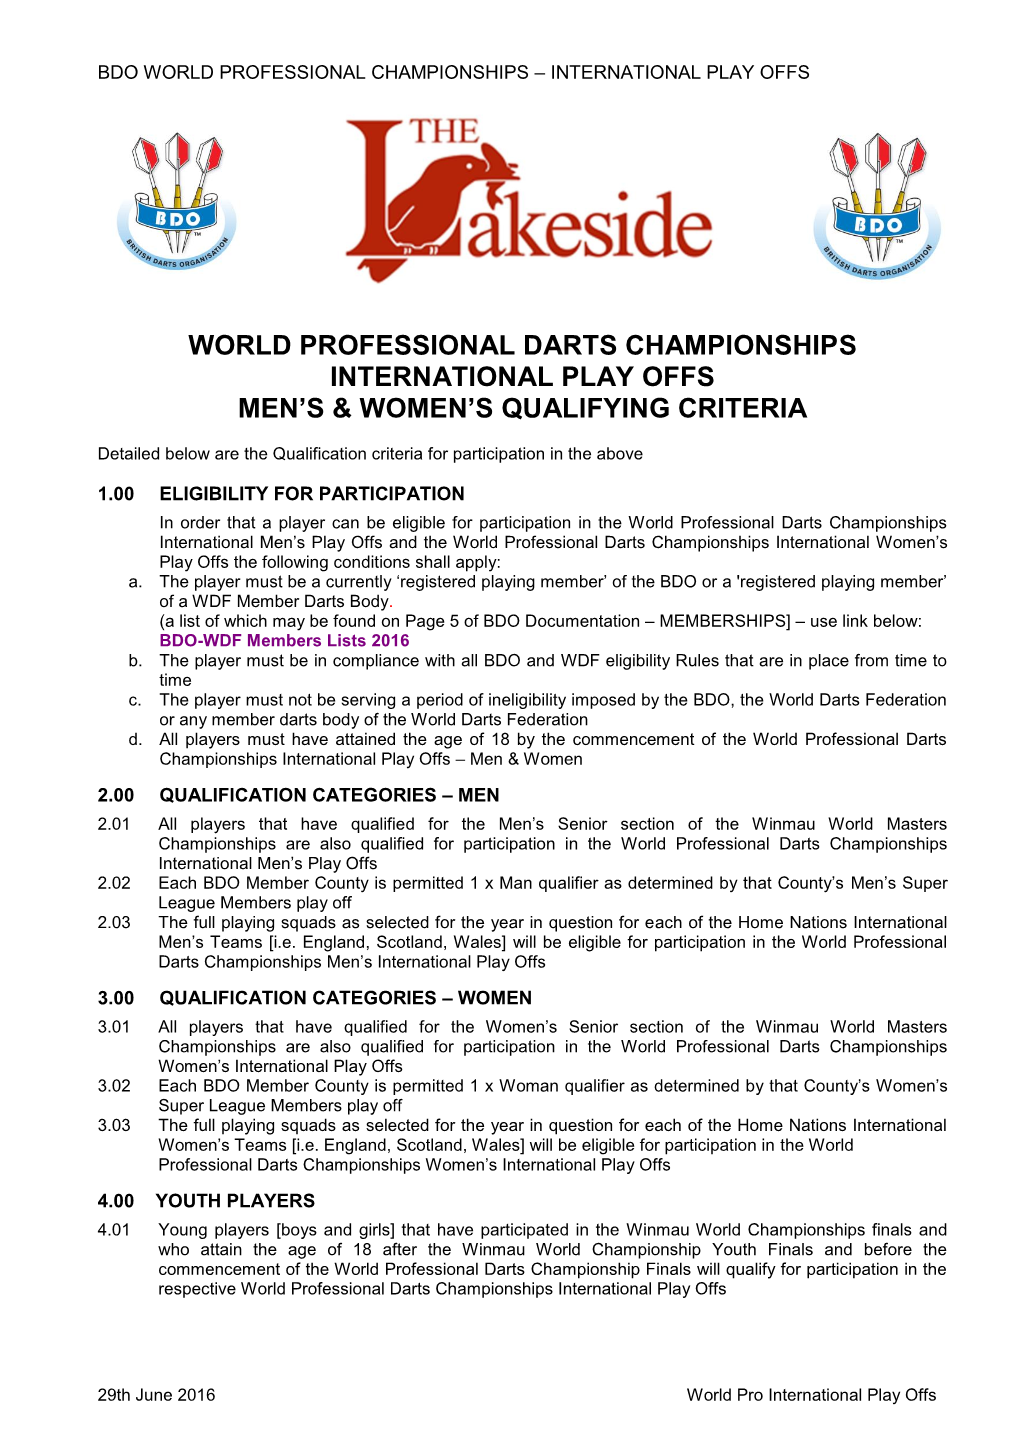 World Professional Darts Championships International Play Offs Men's & Women's Qualifying Criteria